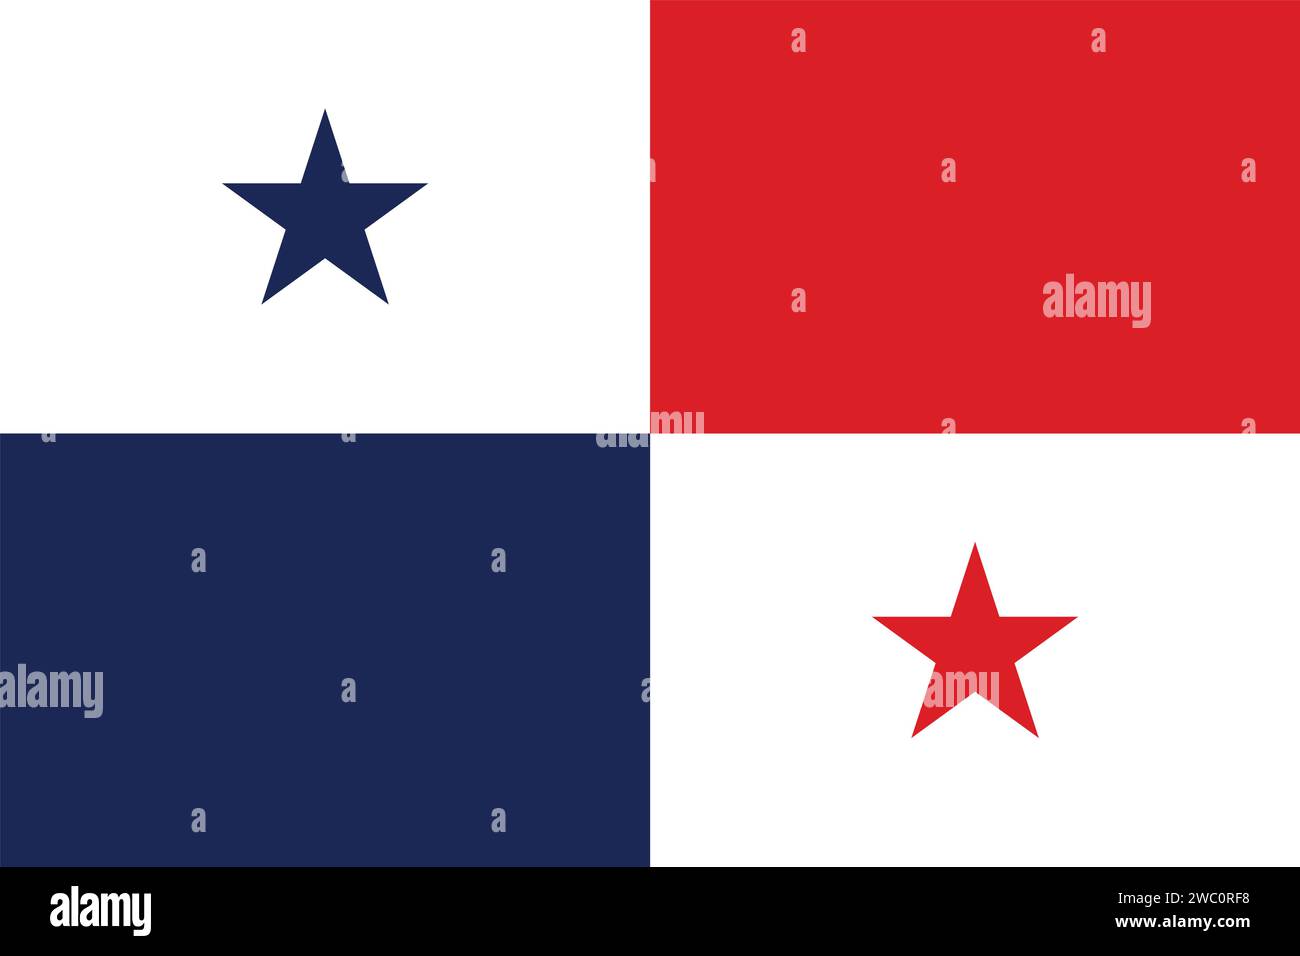 High detailed flag of Panama. National Panama flag. North America. 3D illustration. Stock Vector